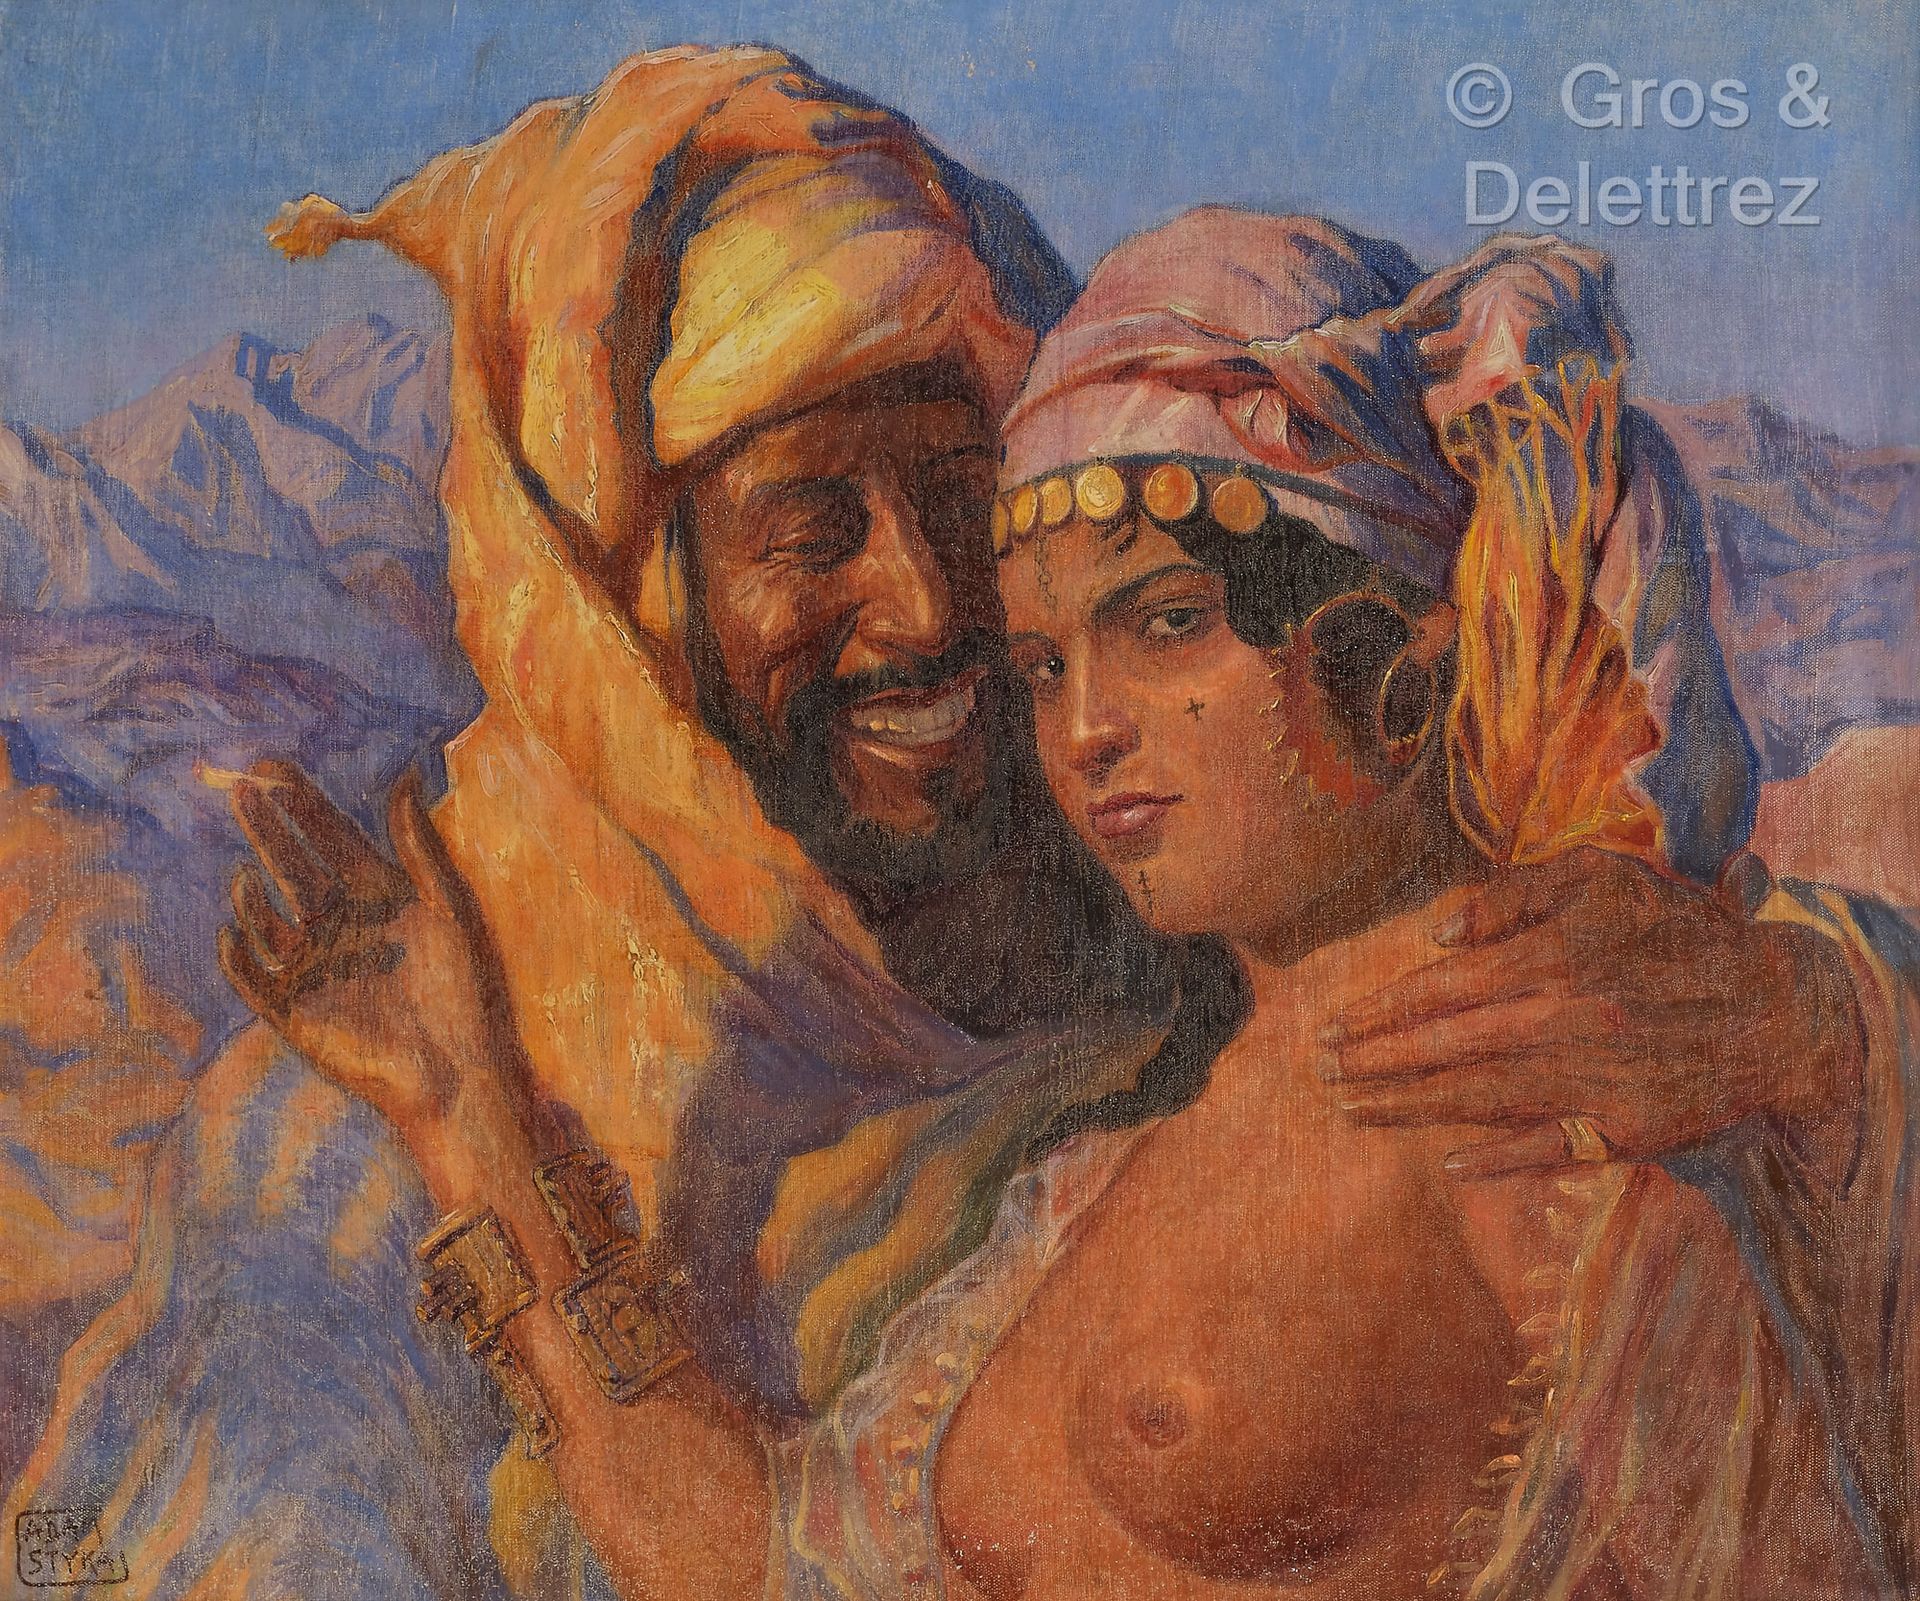 Null 亚当-斯蒂卡 (1890-1959)
一对恋人
布面油画，左下角有签名。
70 x 60厘米